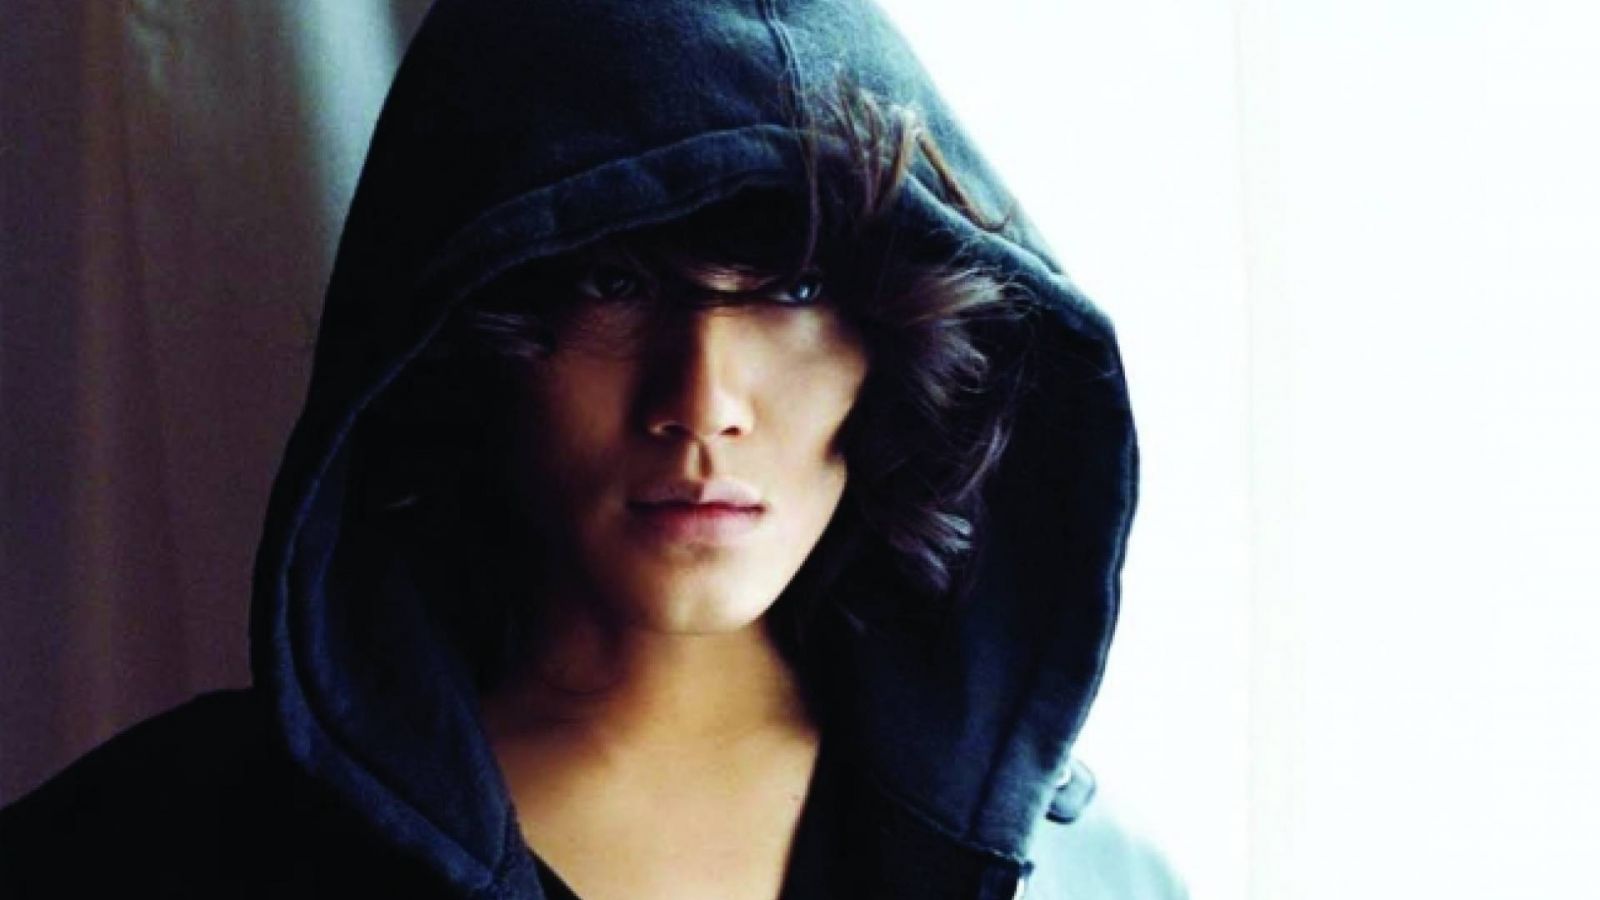 KAT-TUN's JIN AKANISHI to Perform in Los Angeles © Johnny & Associates